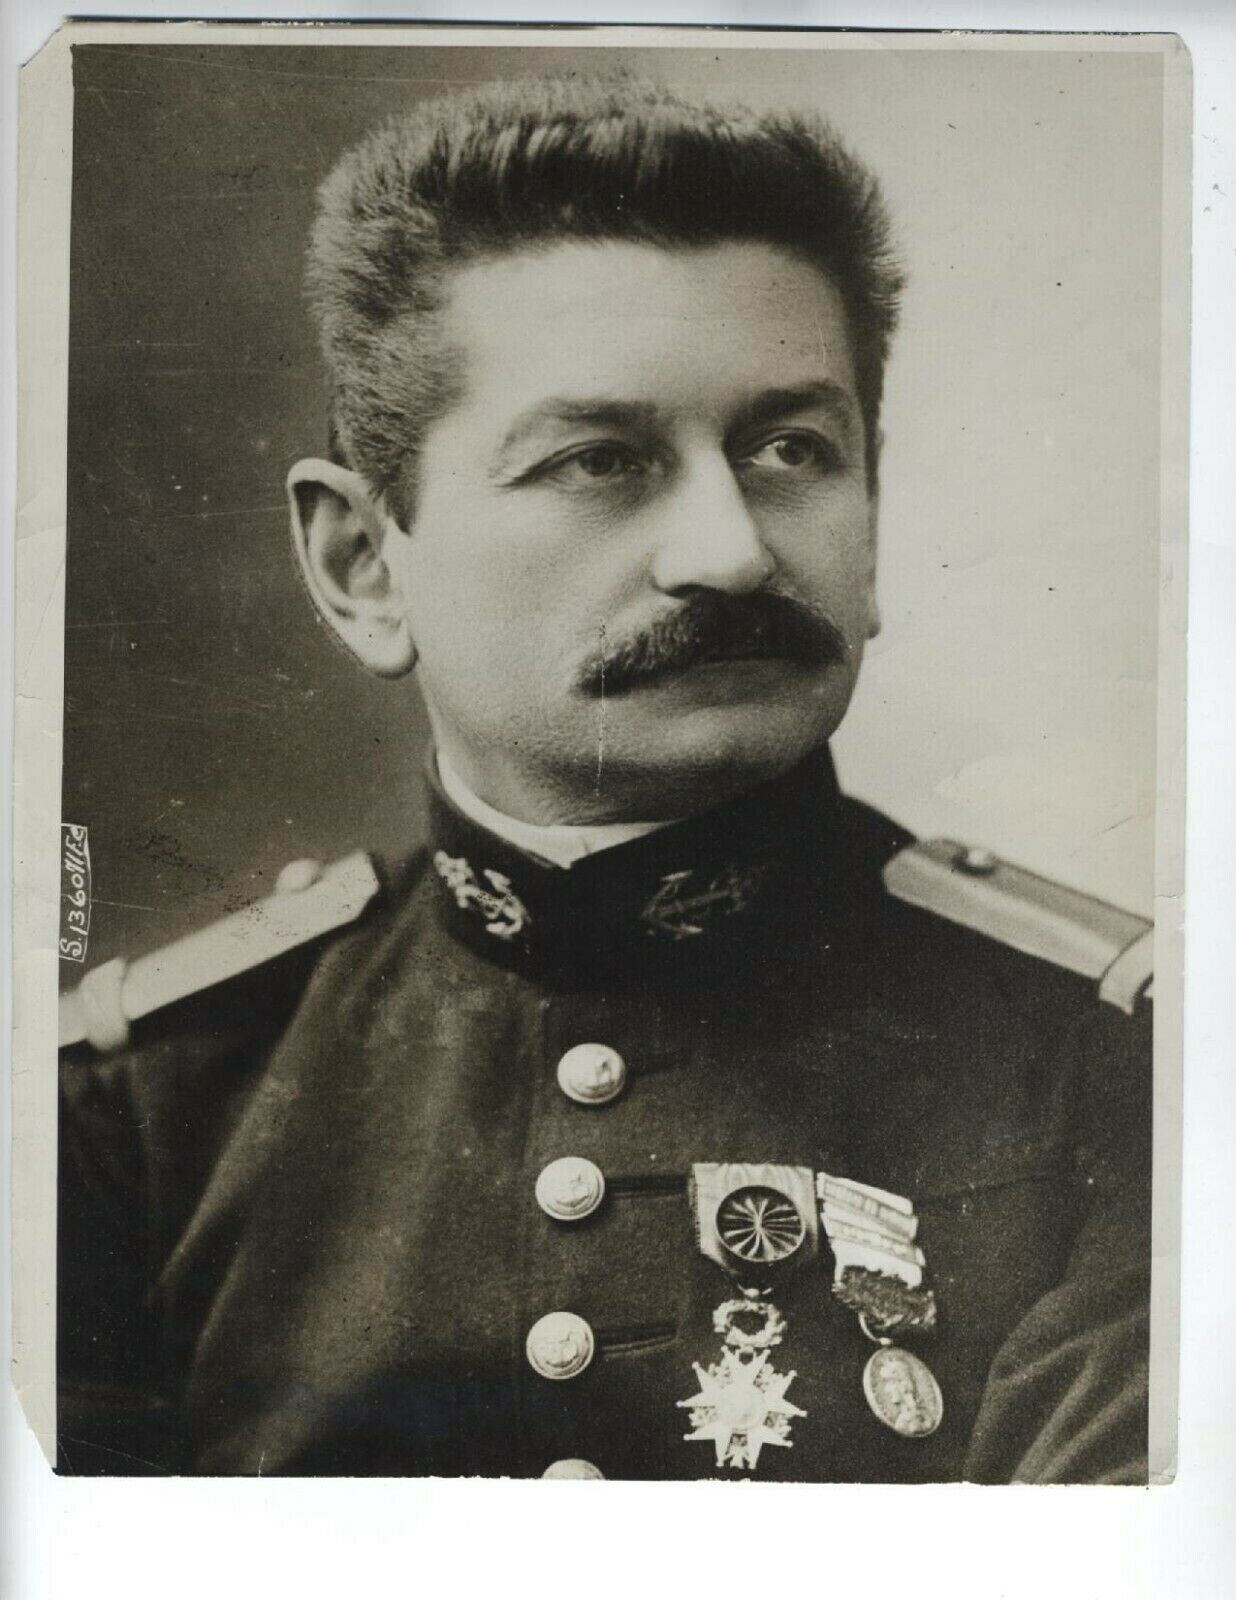 GENERAL MANGIN FRENCH ARMY HERO OF THE MARNE VERDUN 1916 WORLD WAR I PHOTO 8X10